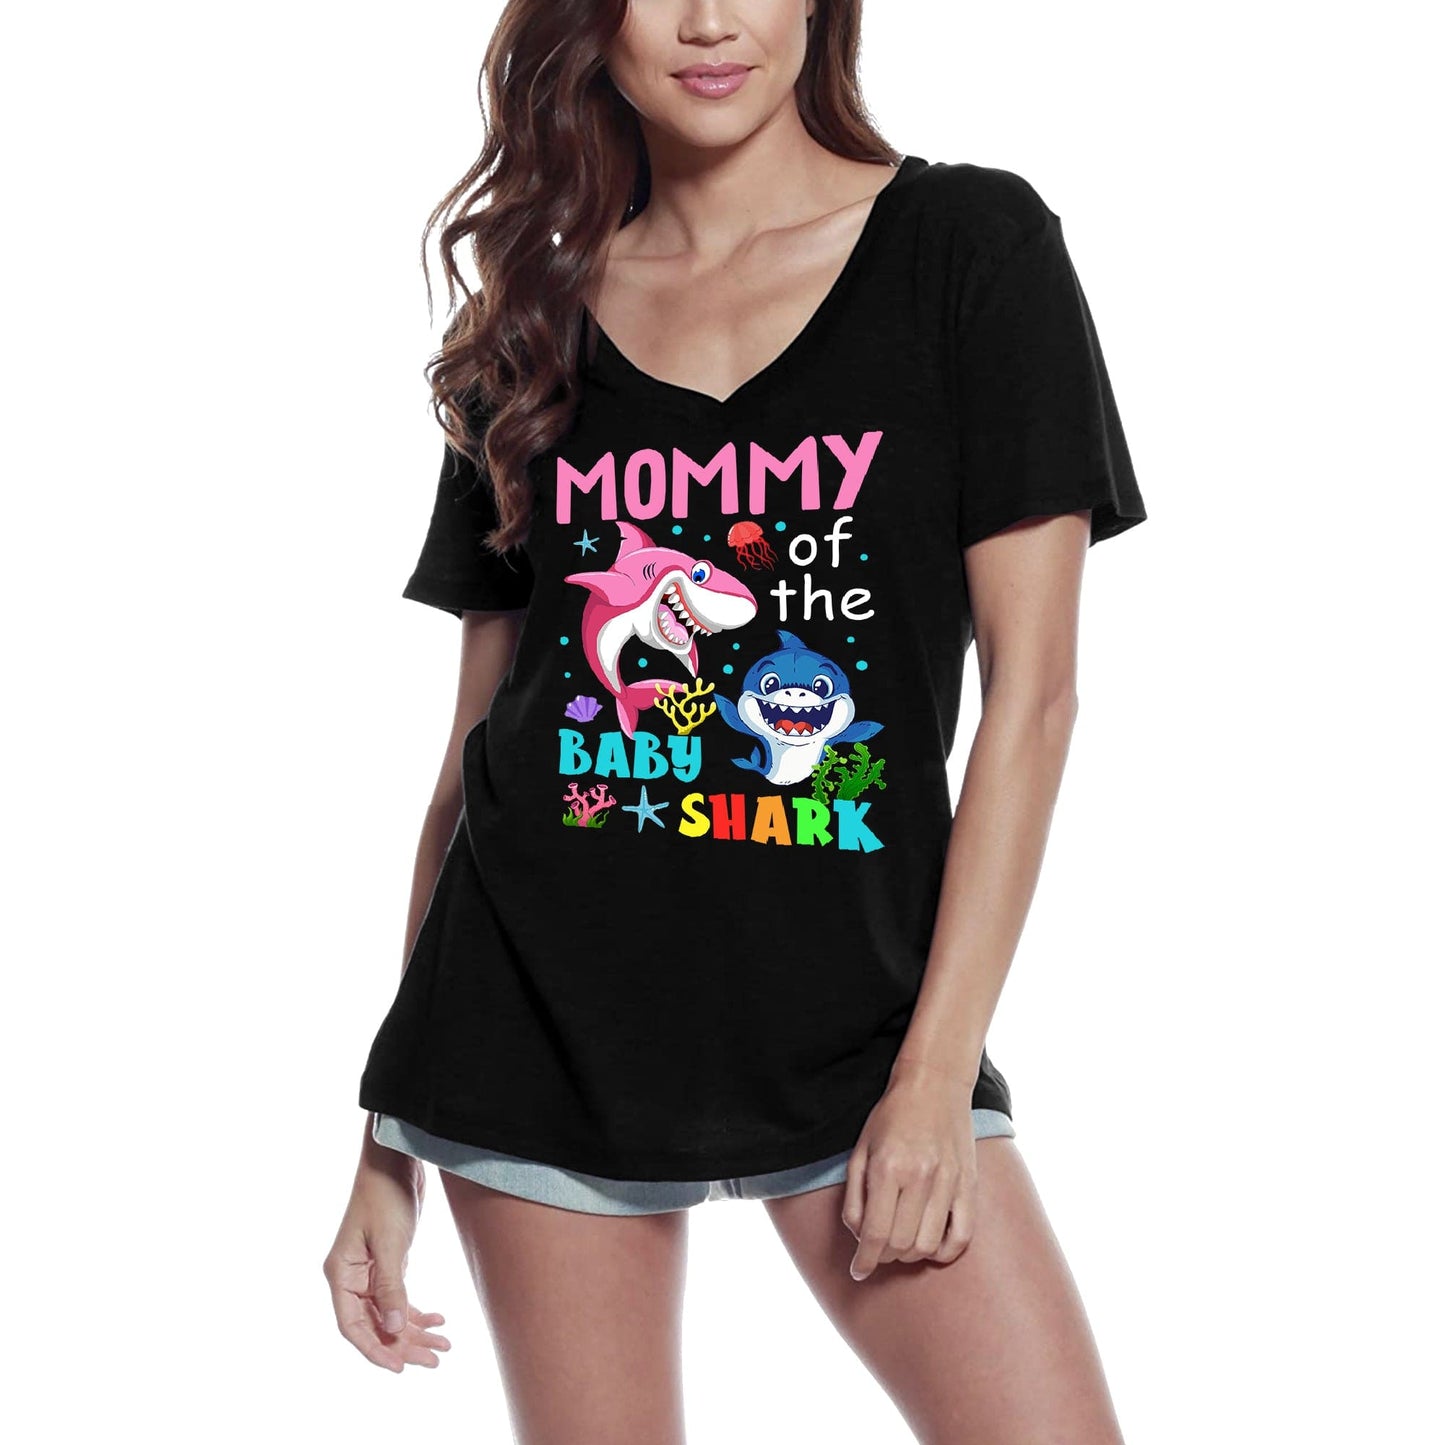 ULTRABASIC Damen T-Shirt Mommy of the Baby Shark – Lustiges Mutter-T-Shirt